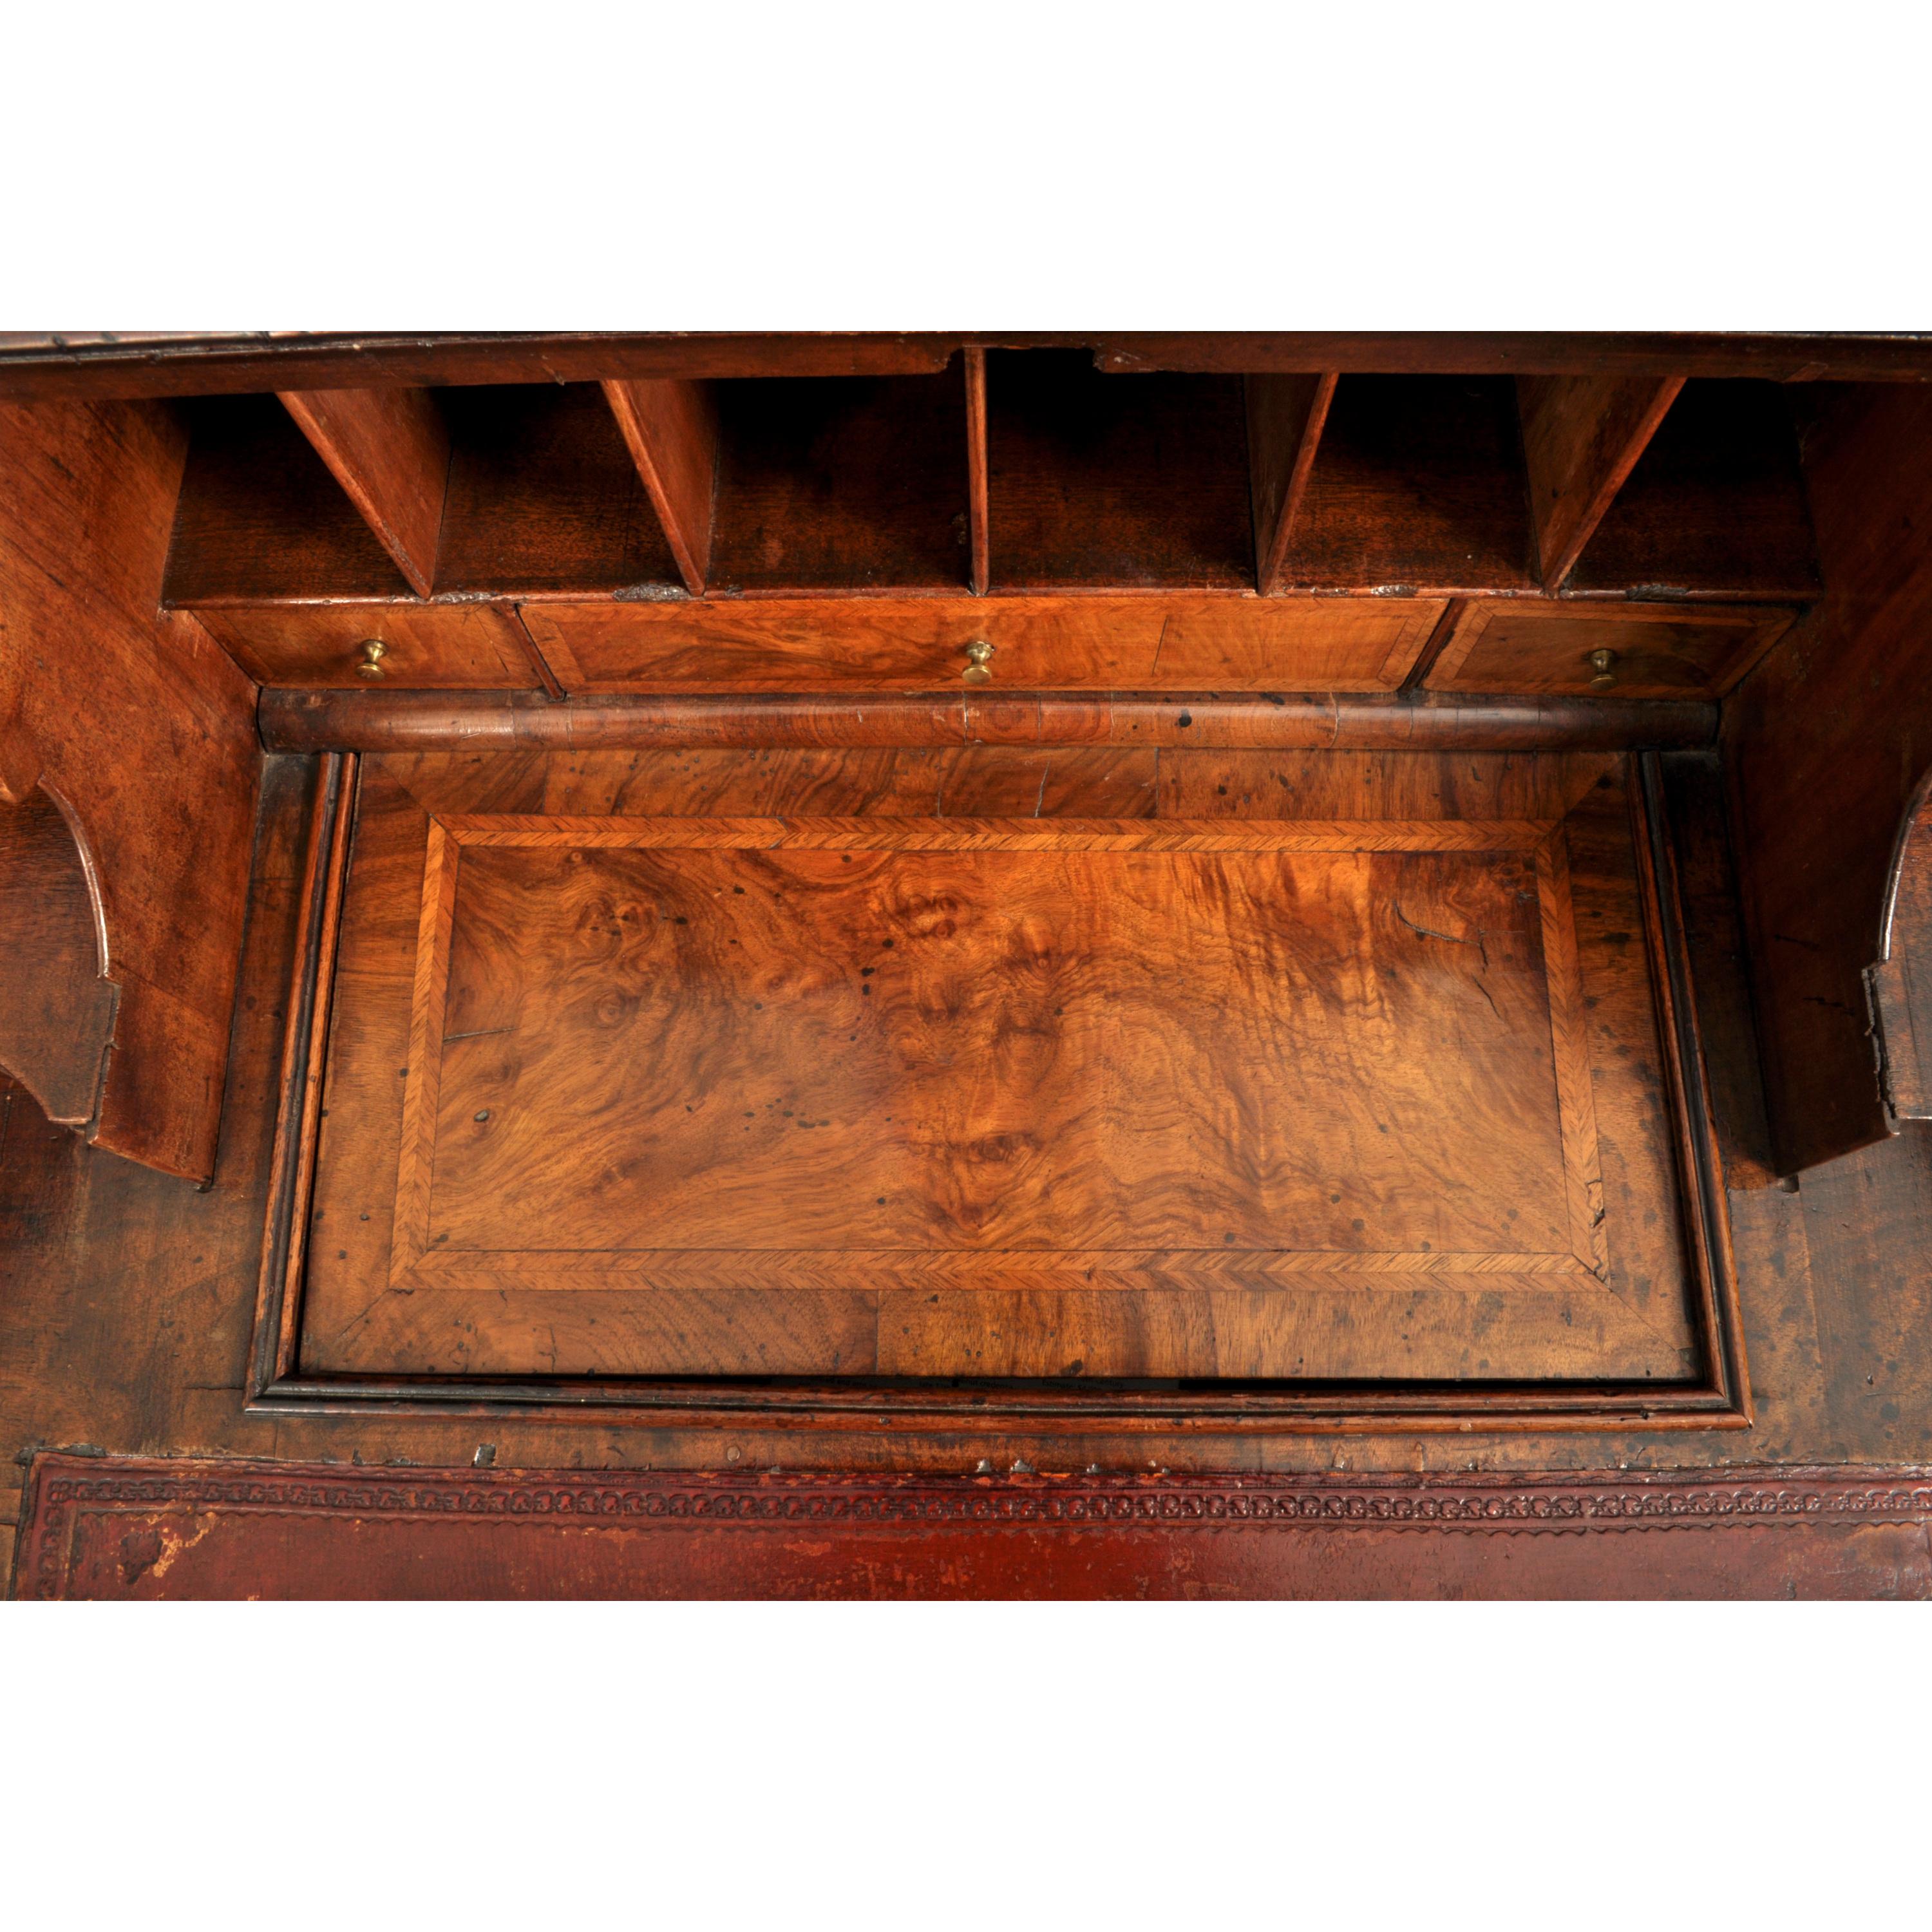 Antique Queen Anne Period Double Dome Burl Walnut Bureau Bookcase Secretary 1710 7